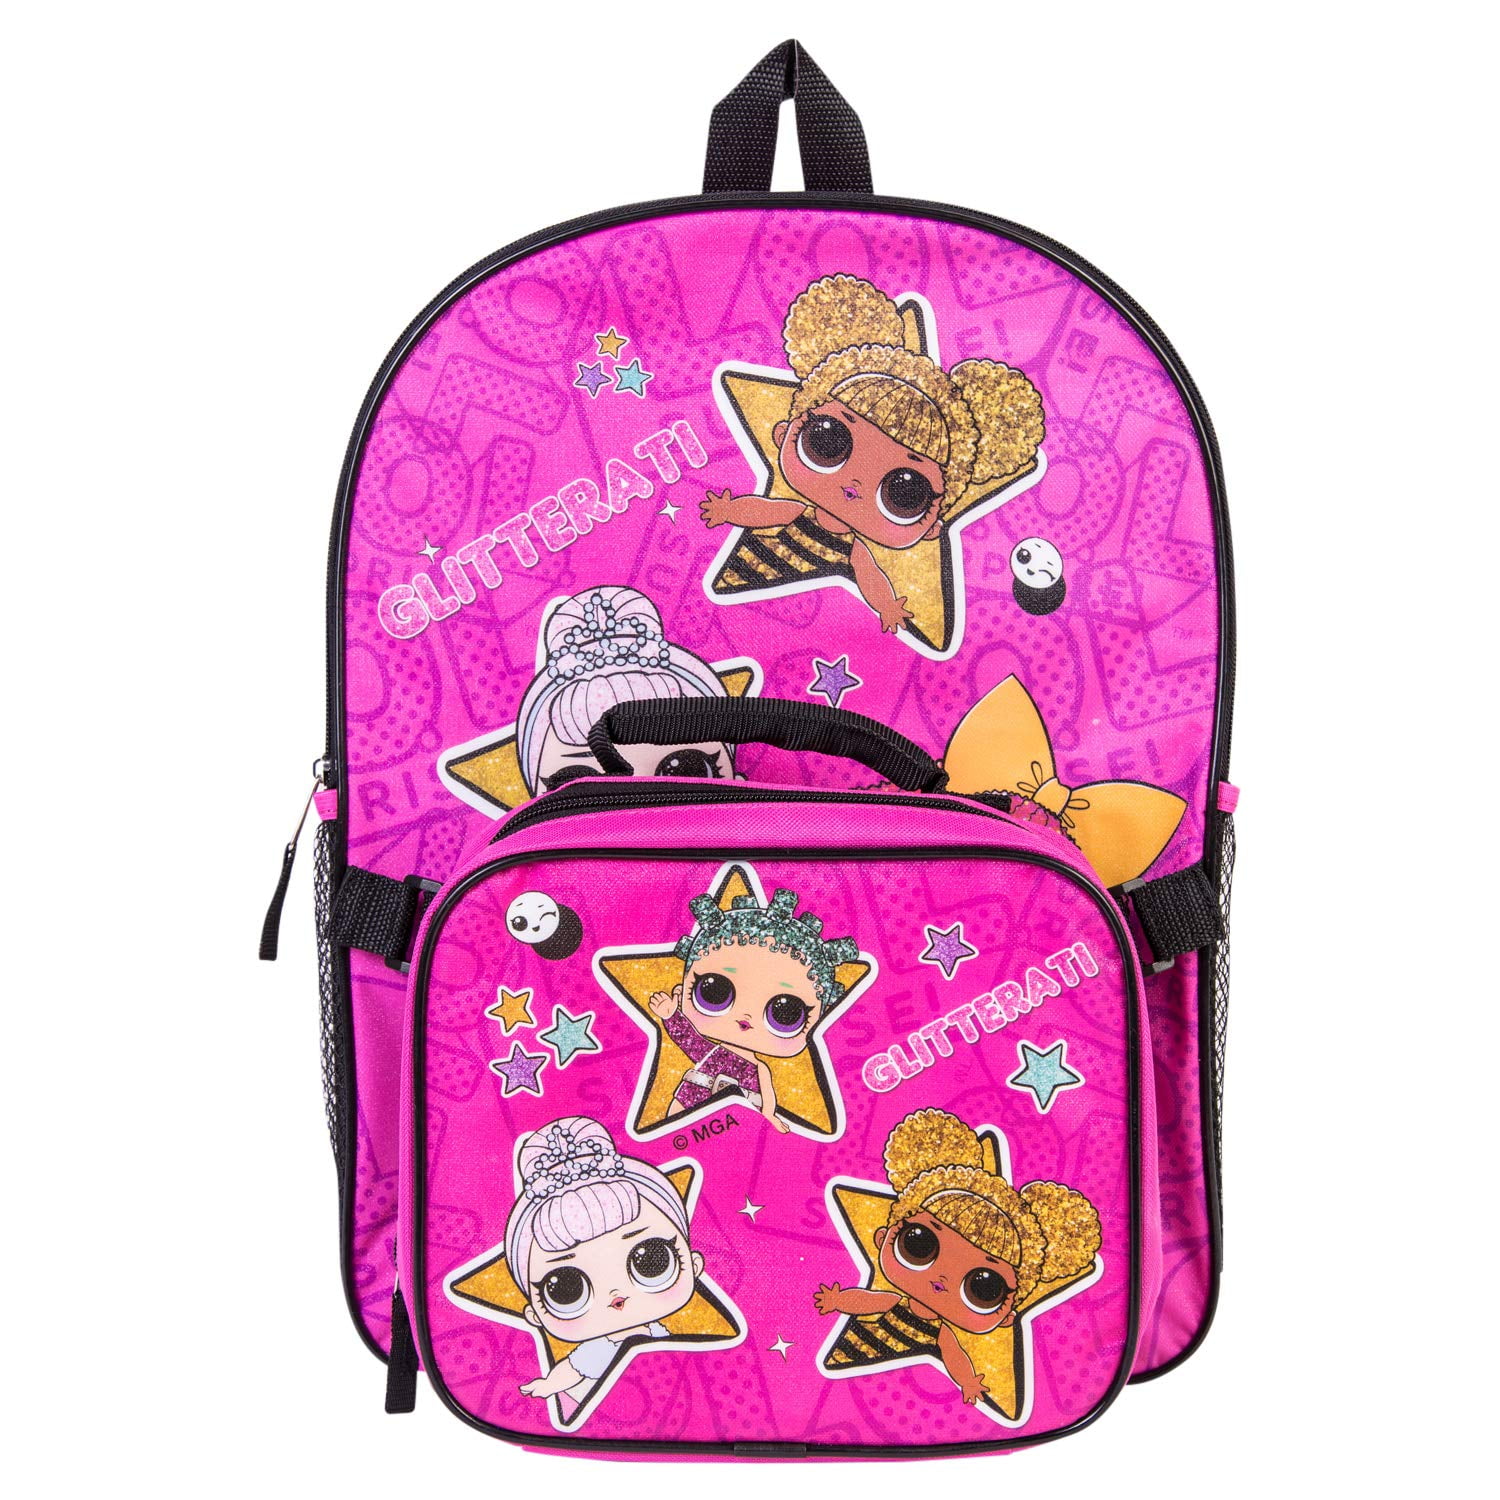 L O L Surprise lol Girl School Book bag Backpack Lunch Box Set Doll Kids Series LOL LOCFL31UP 07c7d0e0 06a9 404c 8928 5e0f46f2fd78 1.a0a4e3d94a5959148e13ec0239806ad1